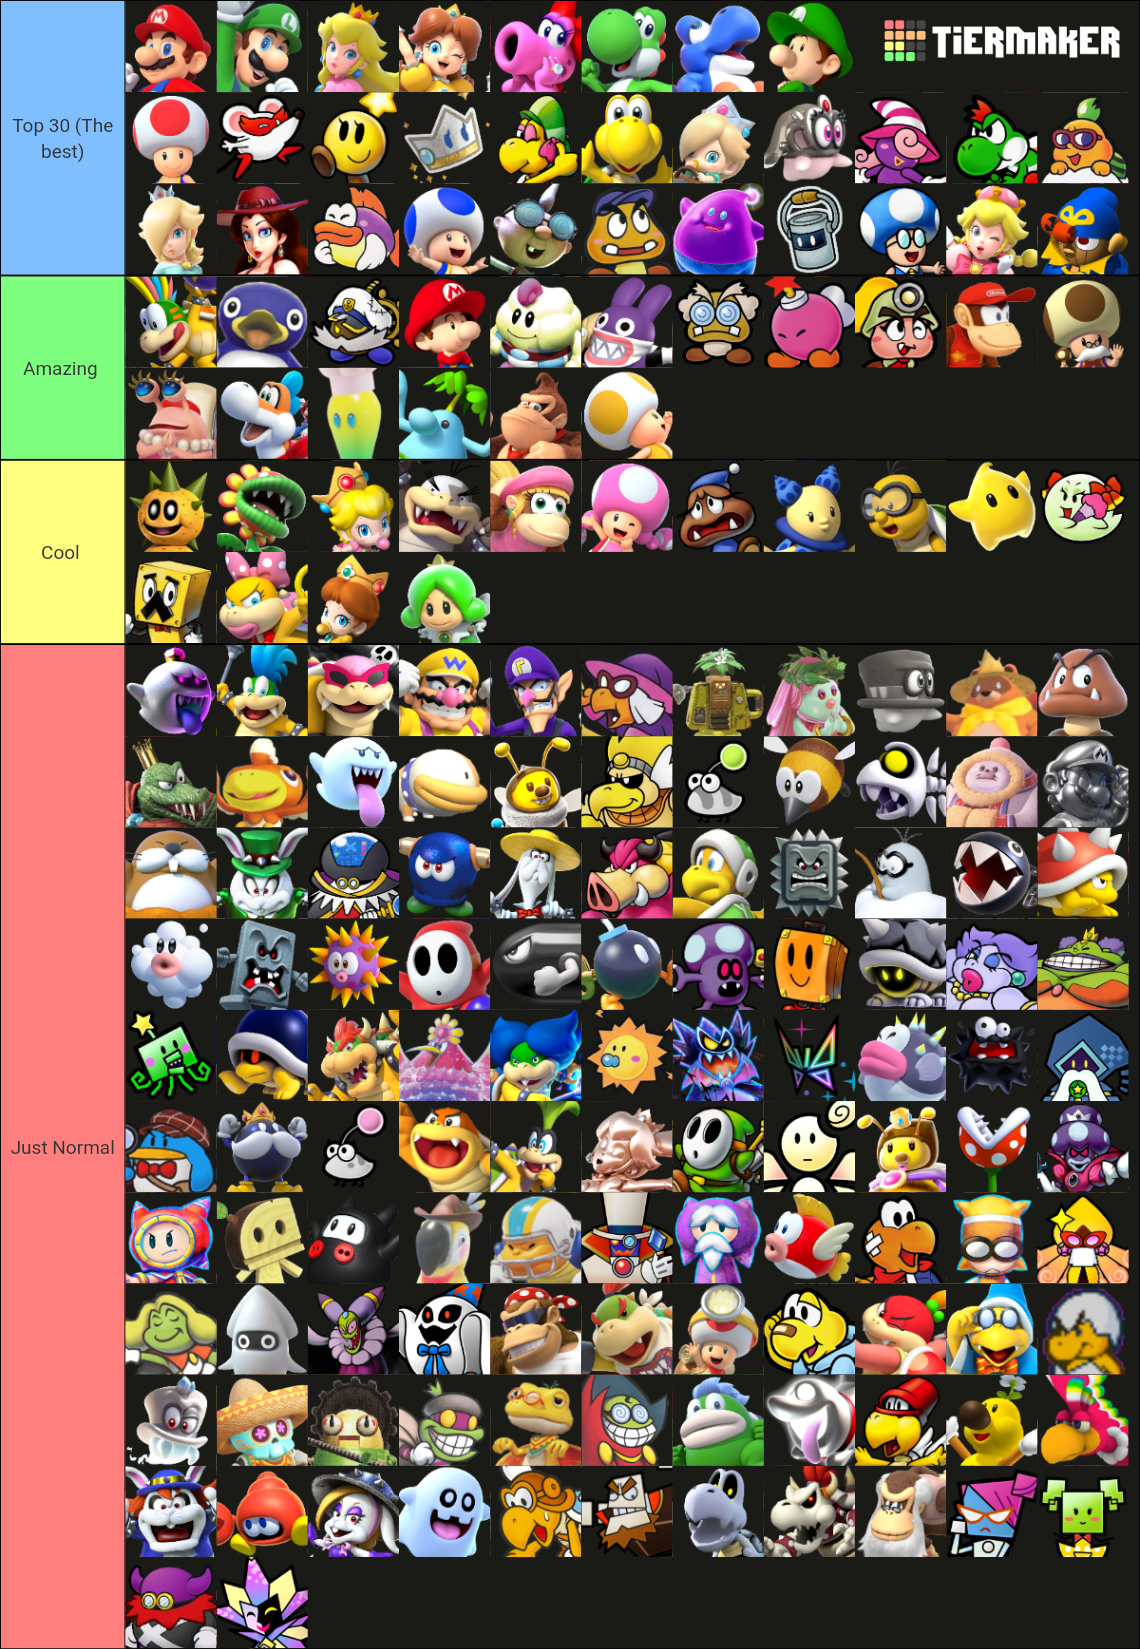 Super Mario Wonder Playable Character Tier List - GameRevolution